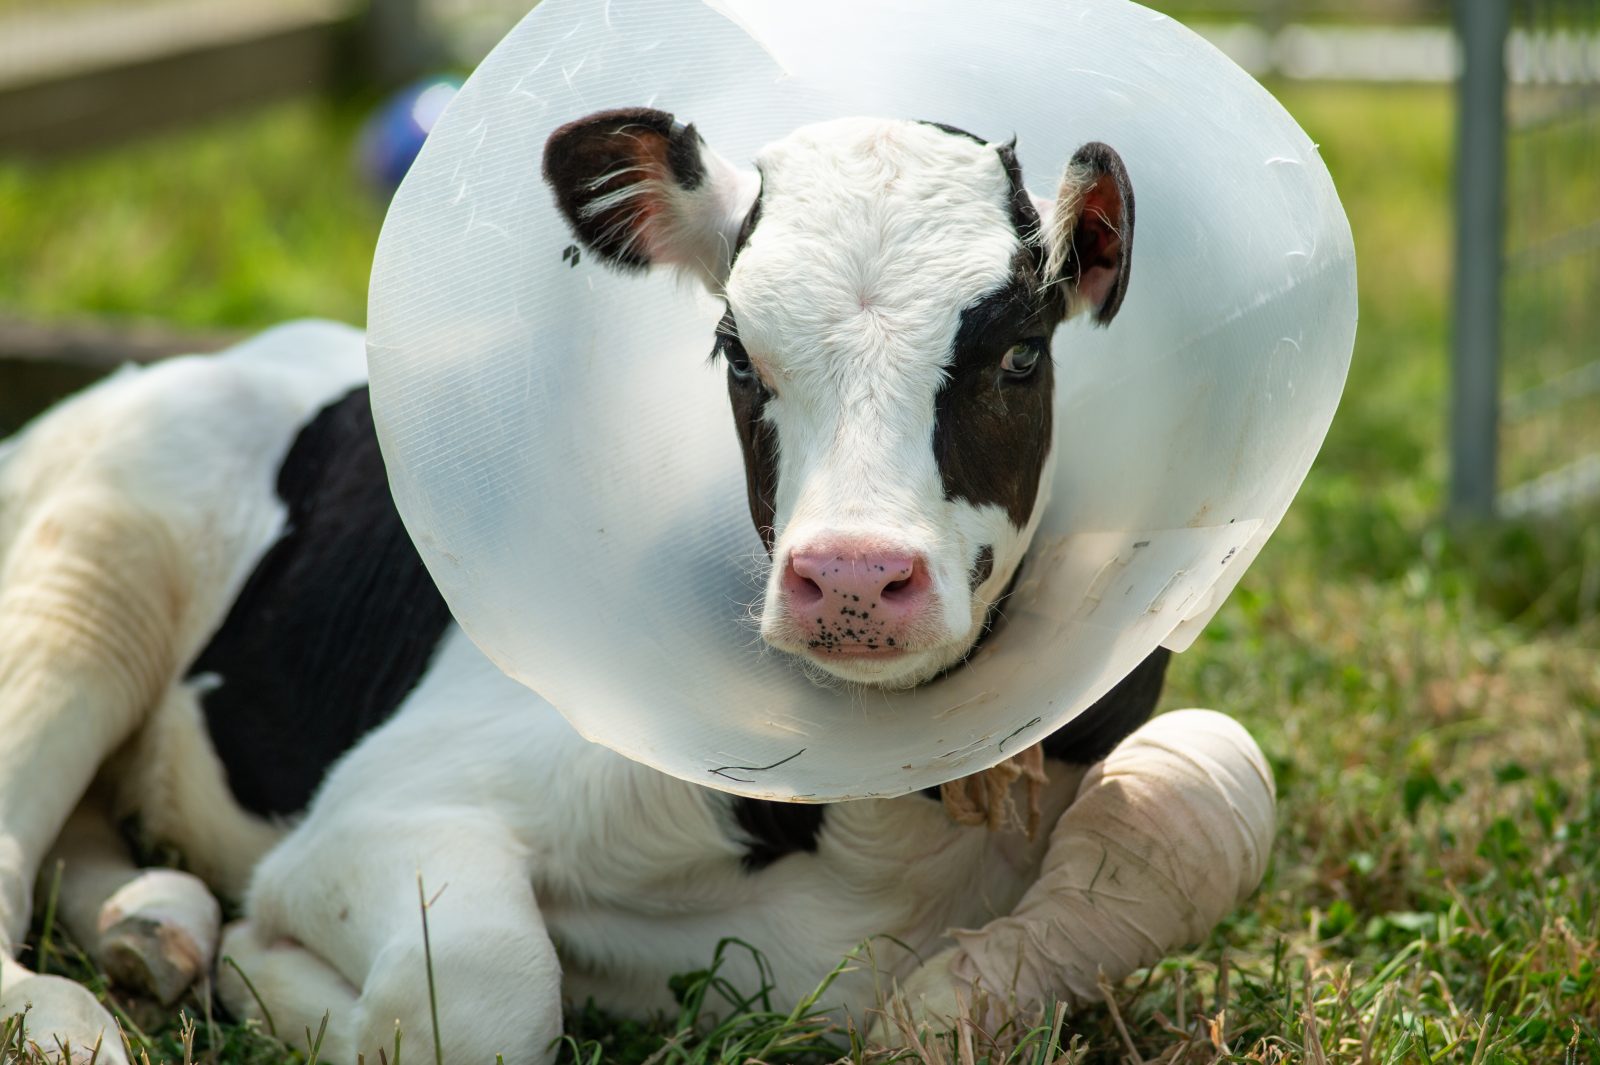 Pietro calf heals at Farm Sanctuary